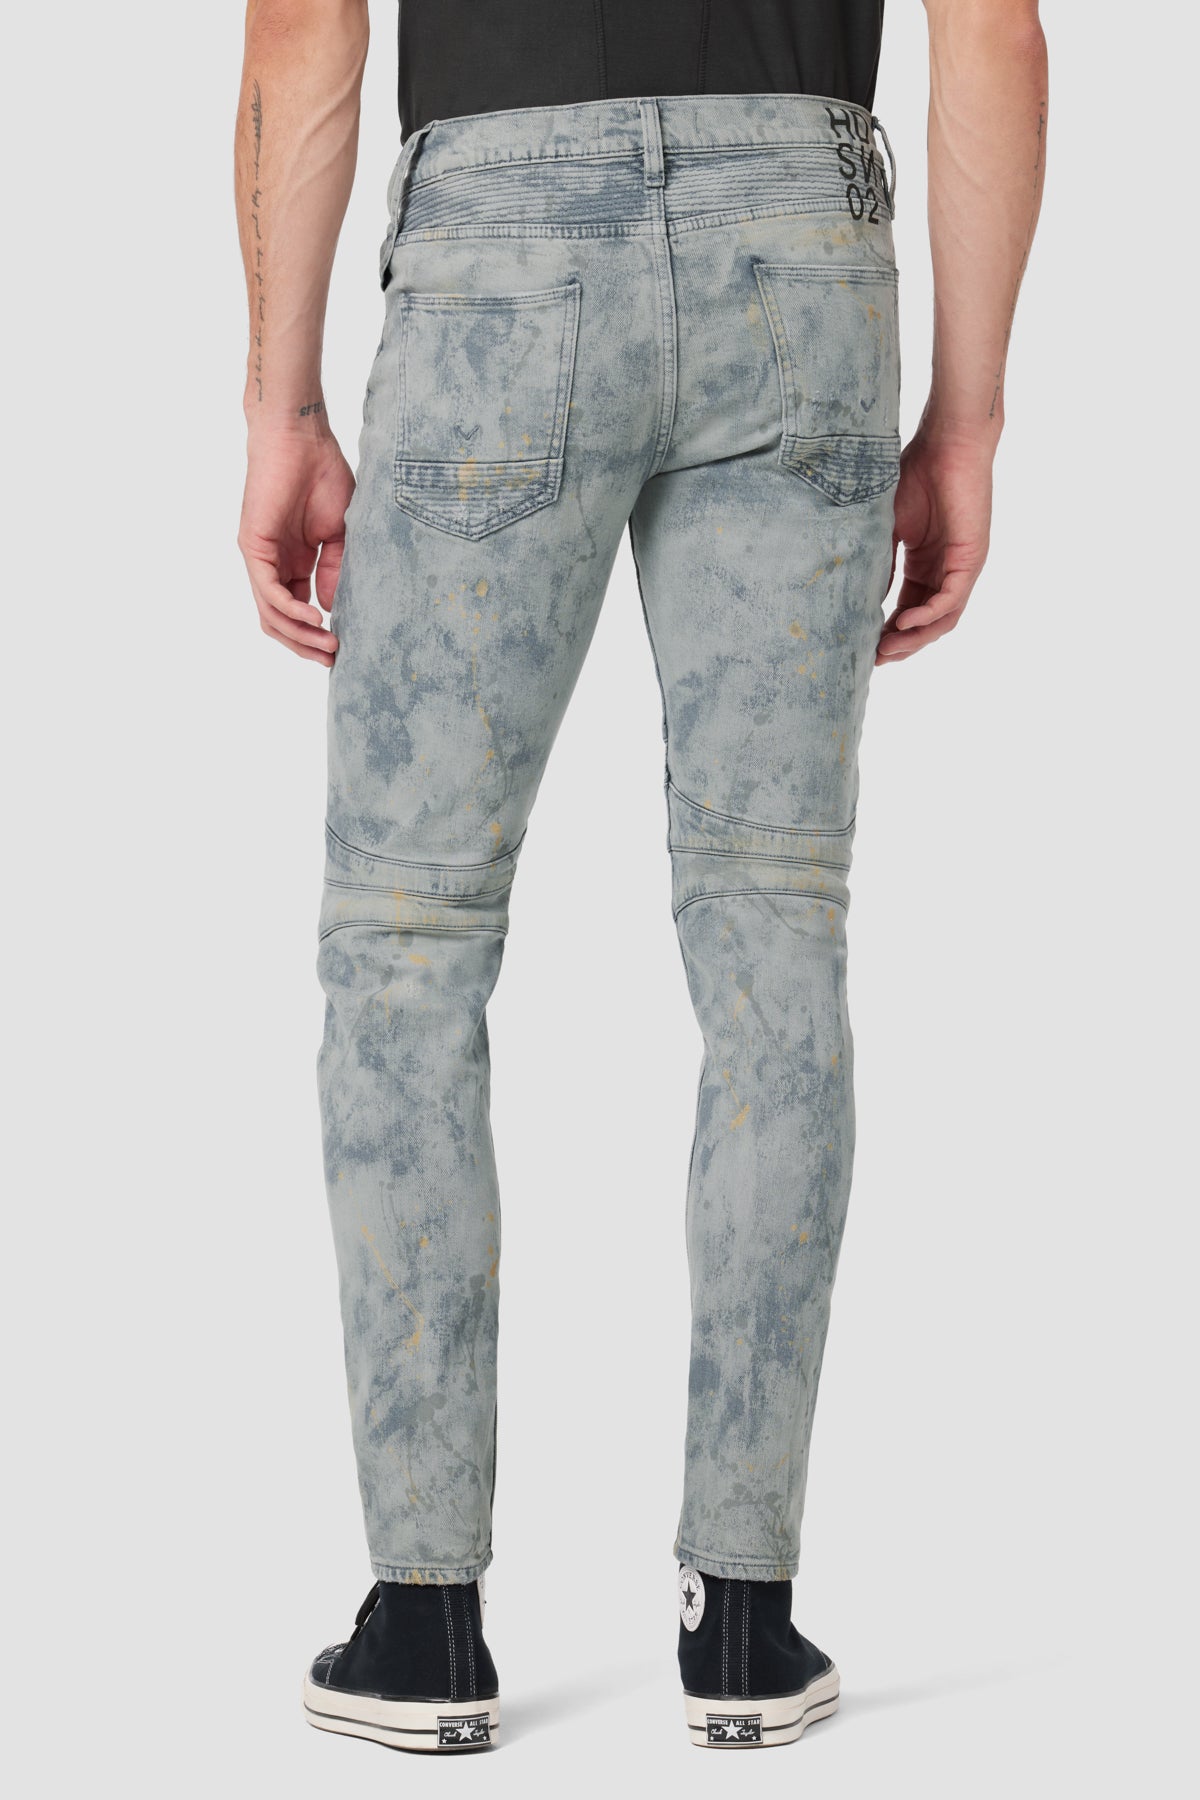 Hudson Jeans, Shorts, New Hudson Mens Blinder V2 Denim Biker Shorts